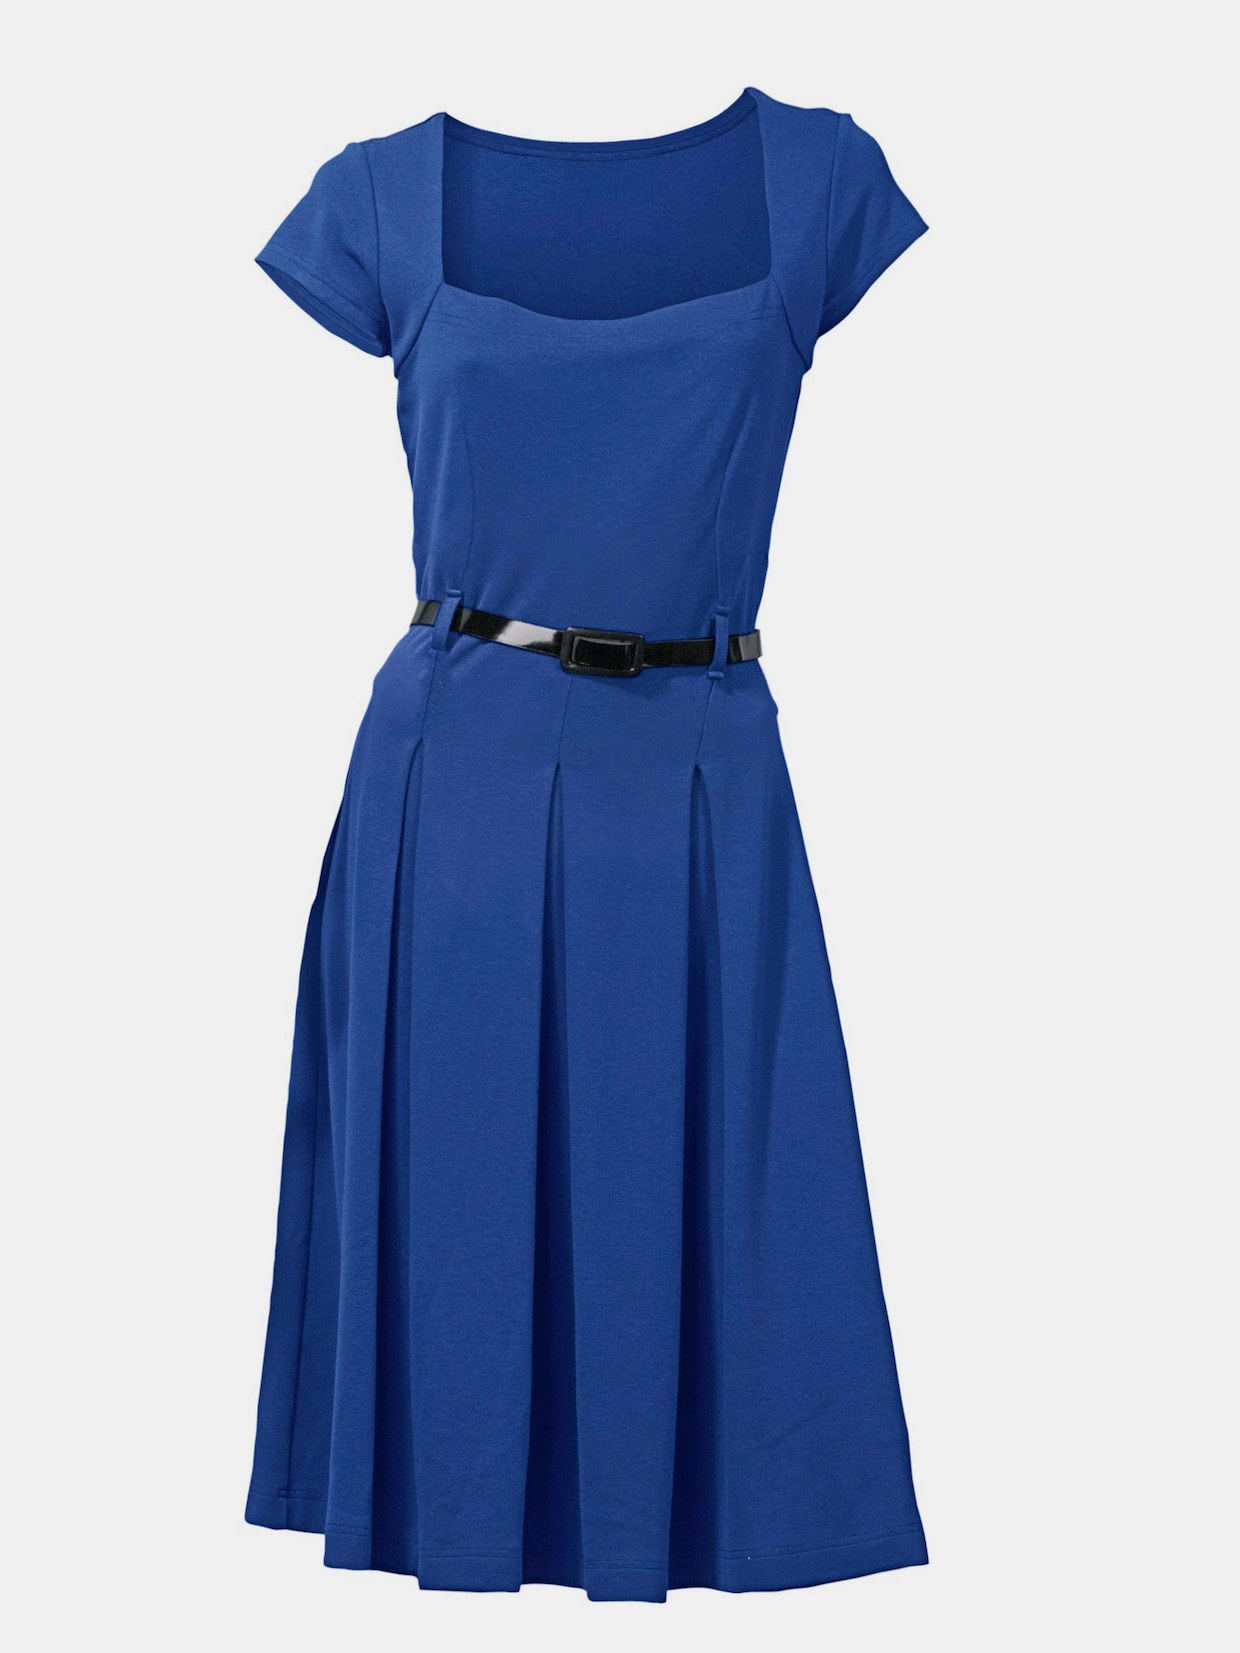 Ashley Brooke Jersey jurk - koningsblauw